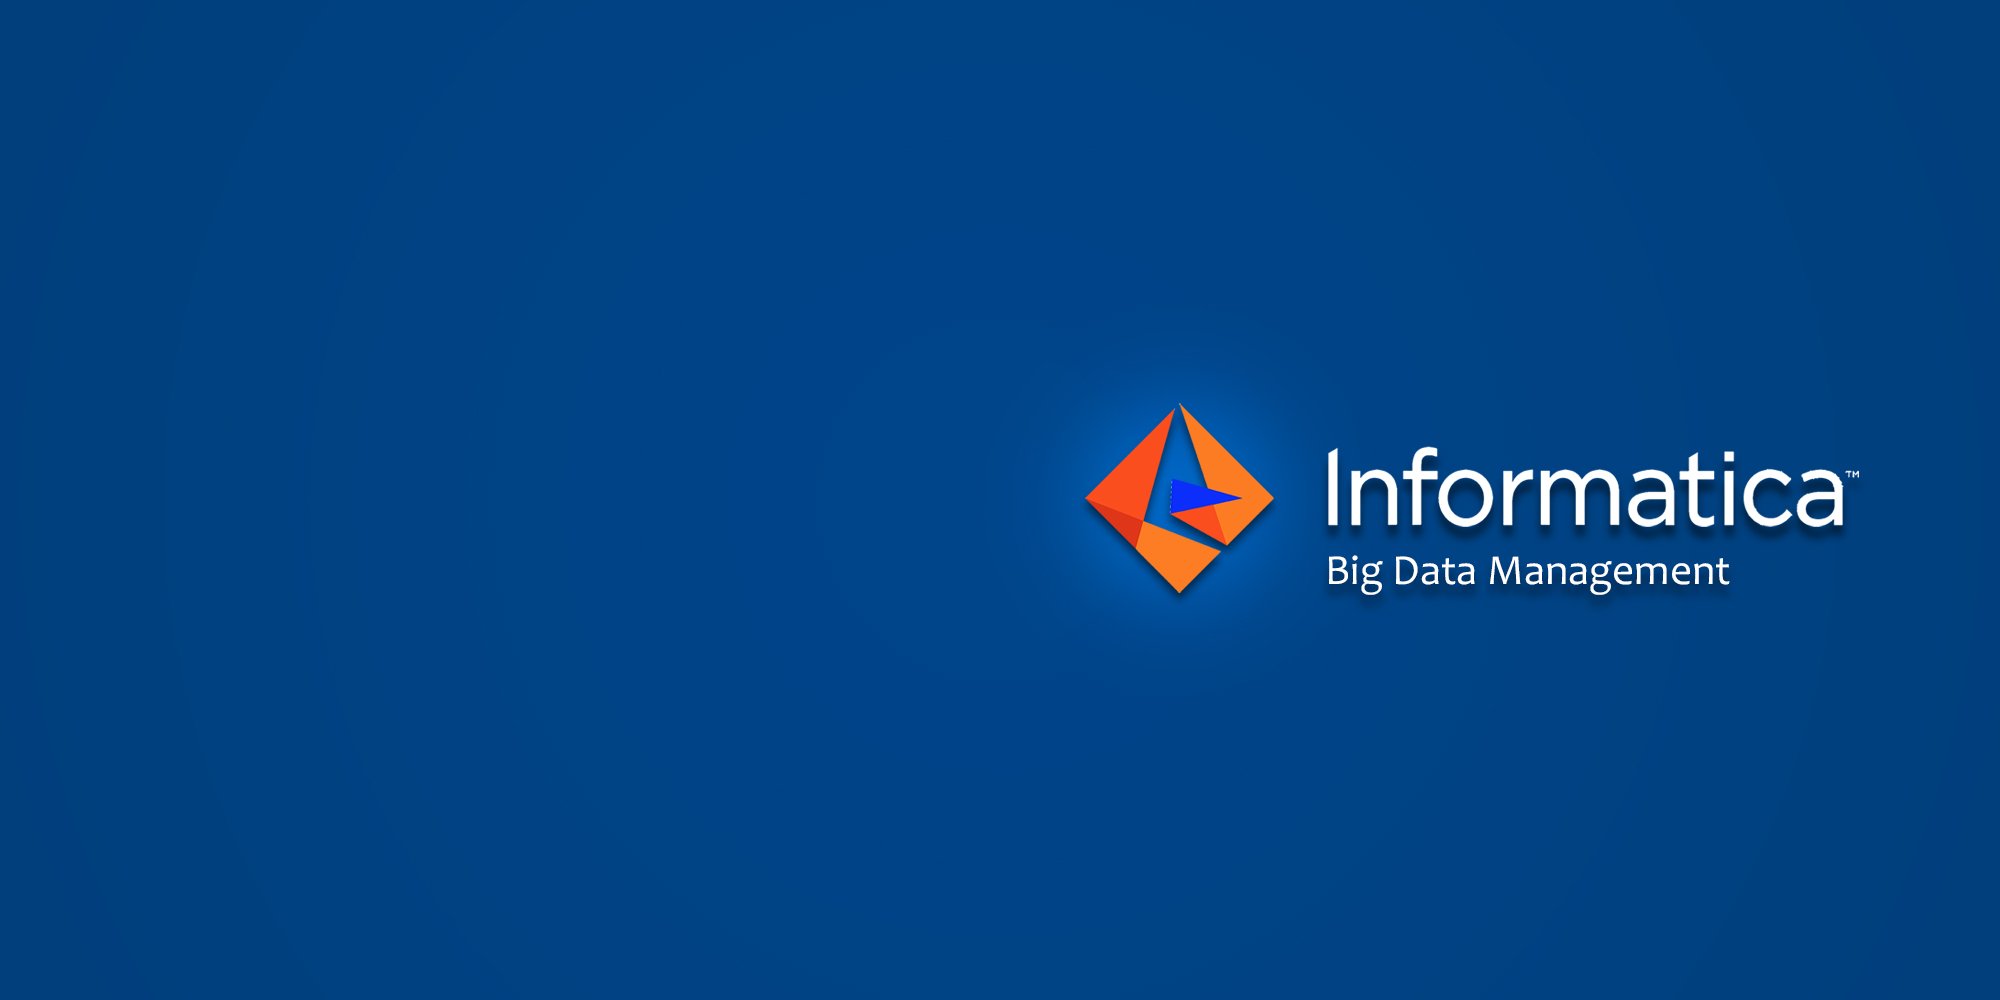 Informatica Big Data Management Training